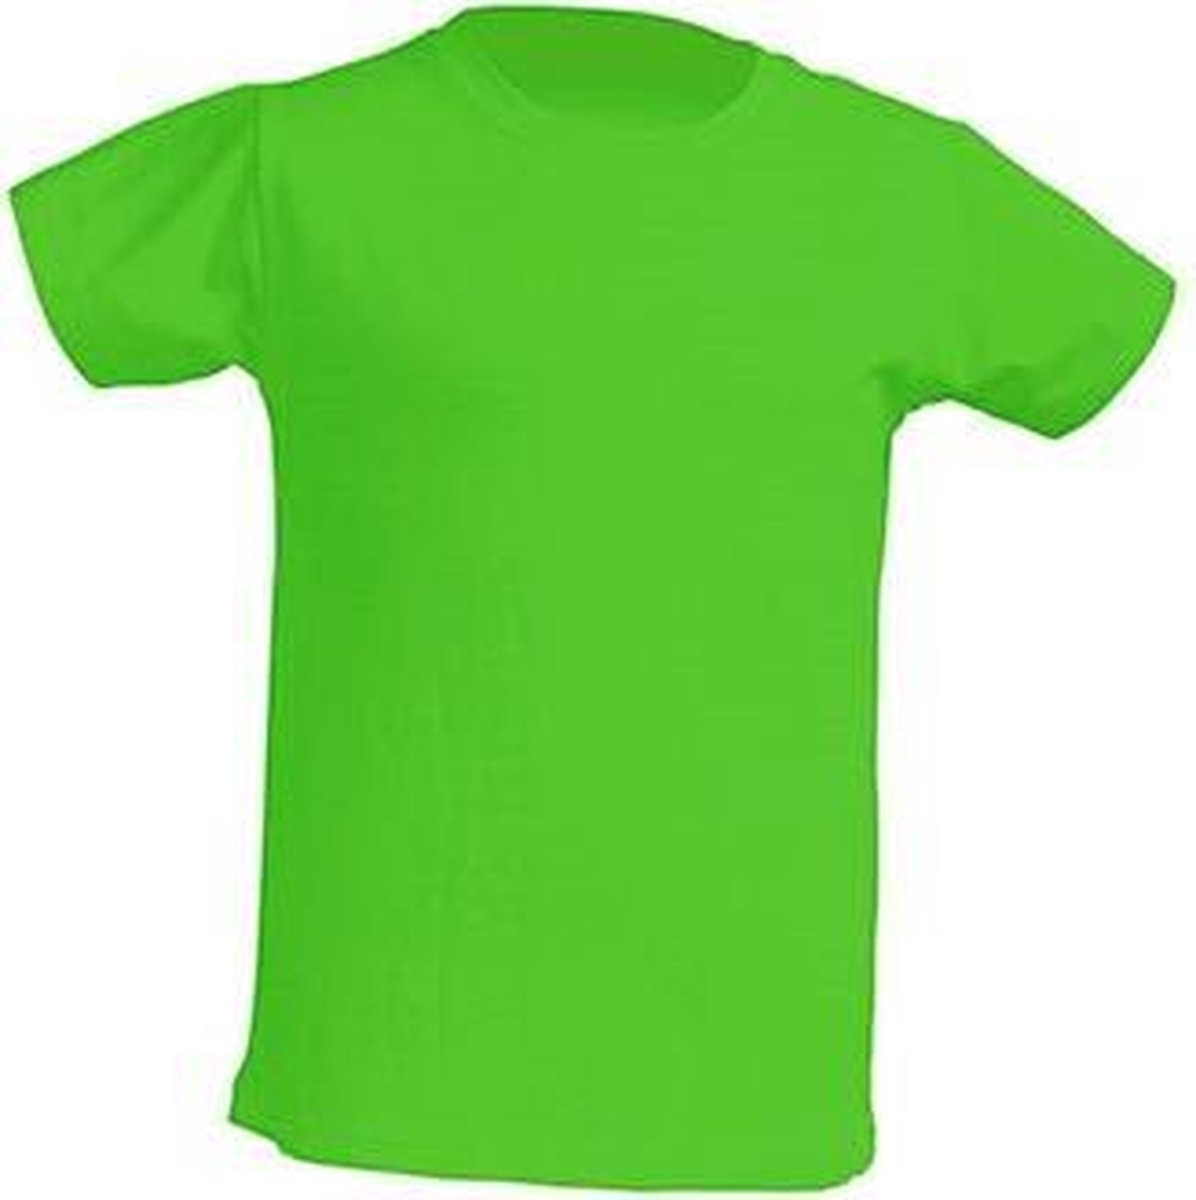 JHK Kinder t-shirt in lime maat 3-4 jaar (104) - set van 5 stuks